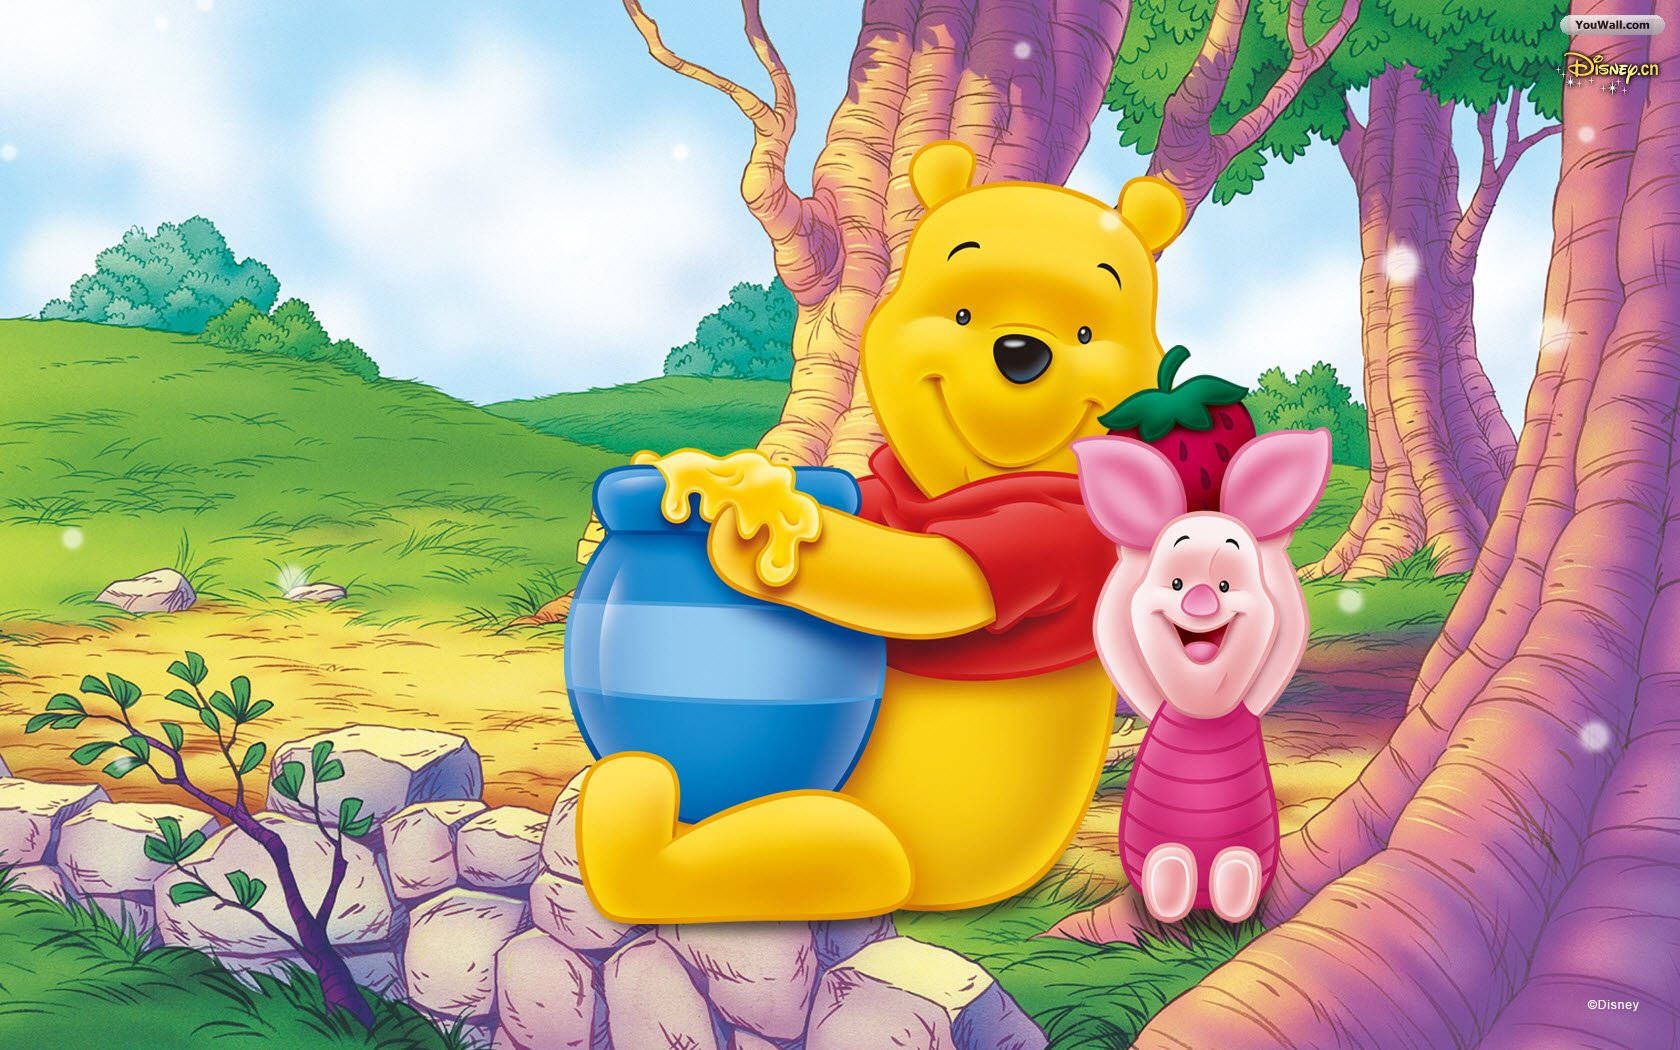 Winnie The Pooh Iphone Display Wallpaper